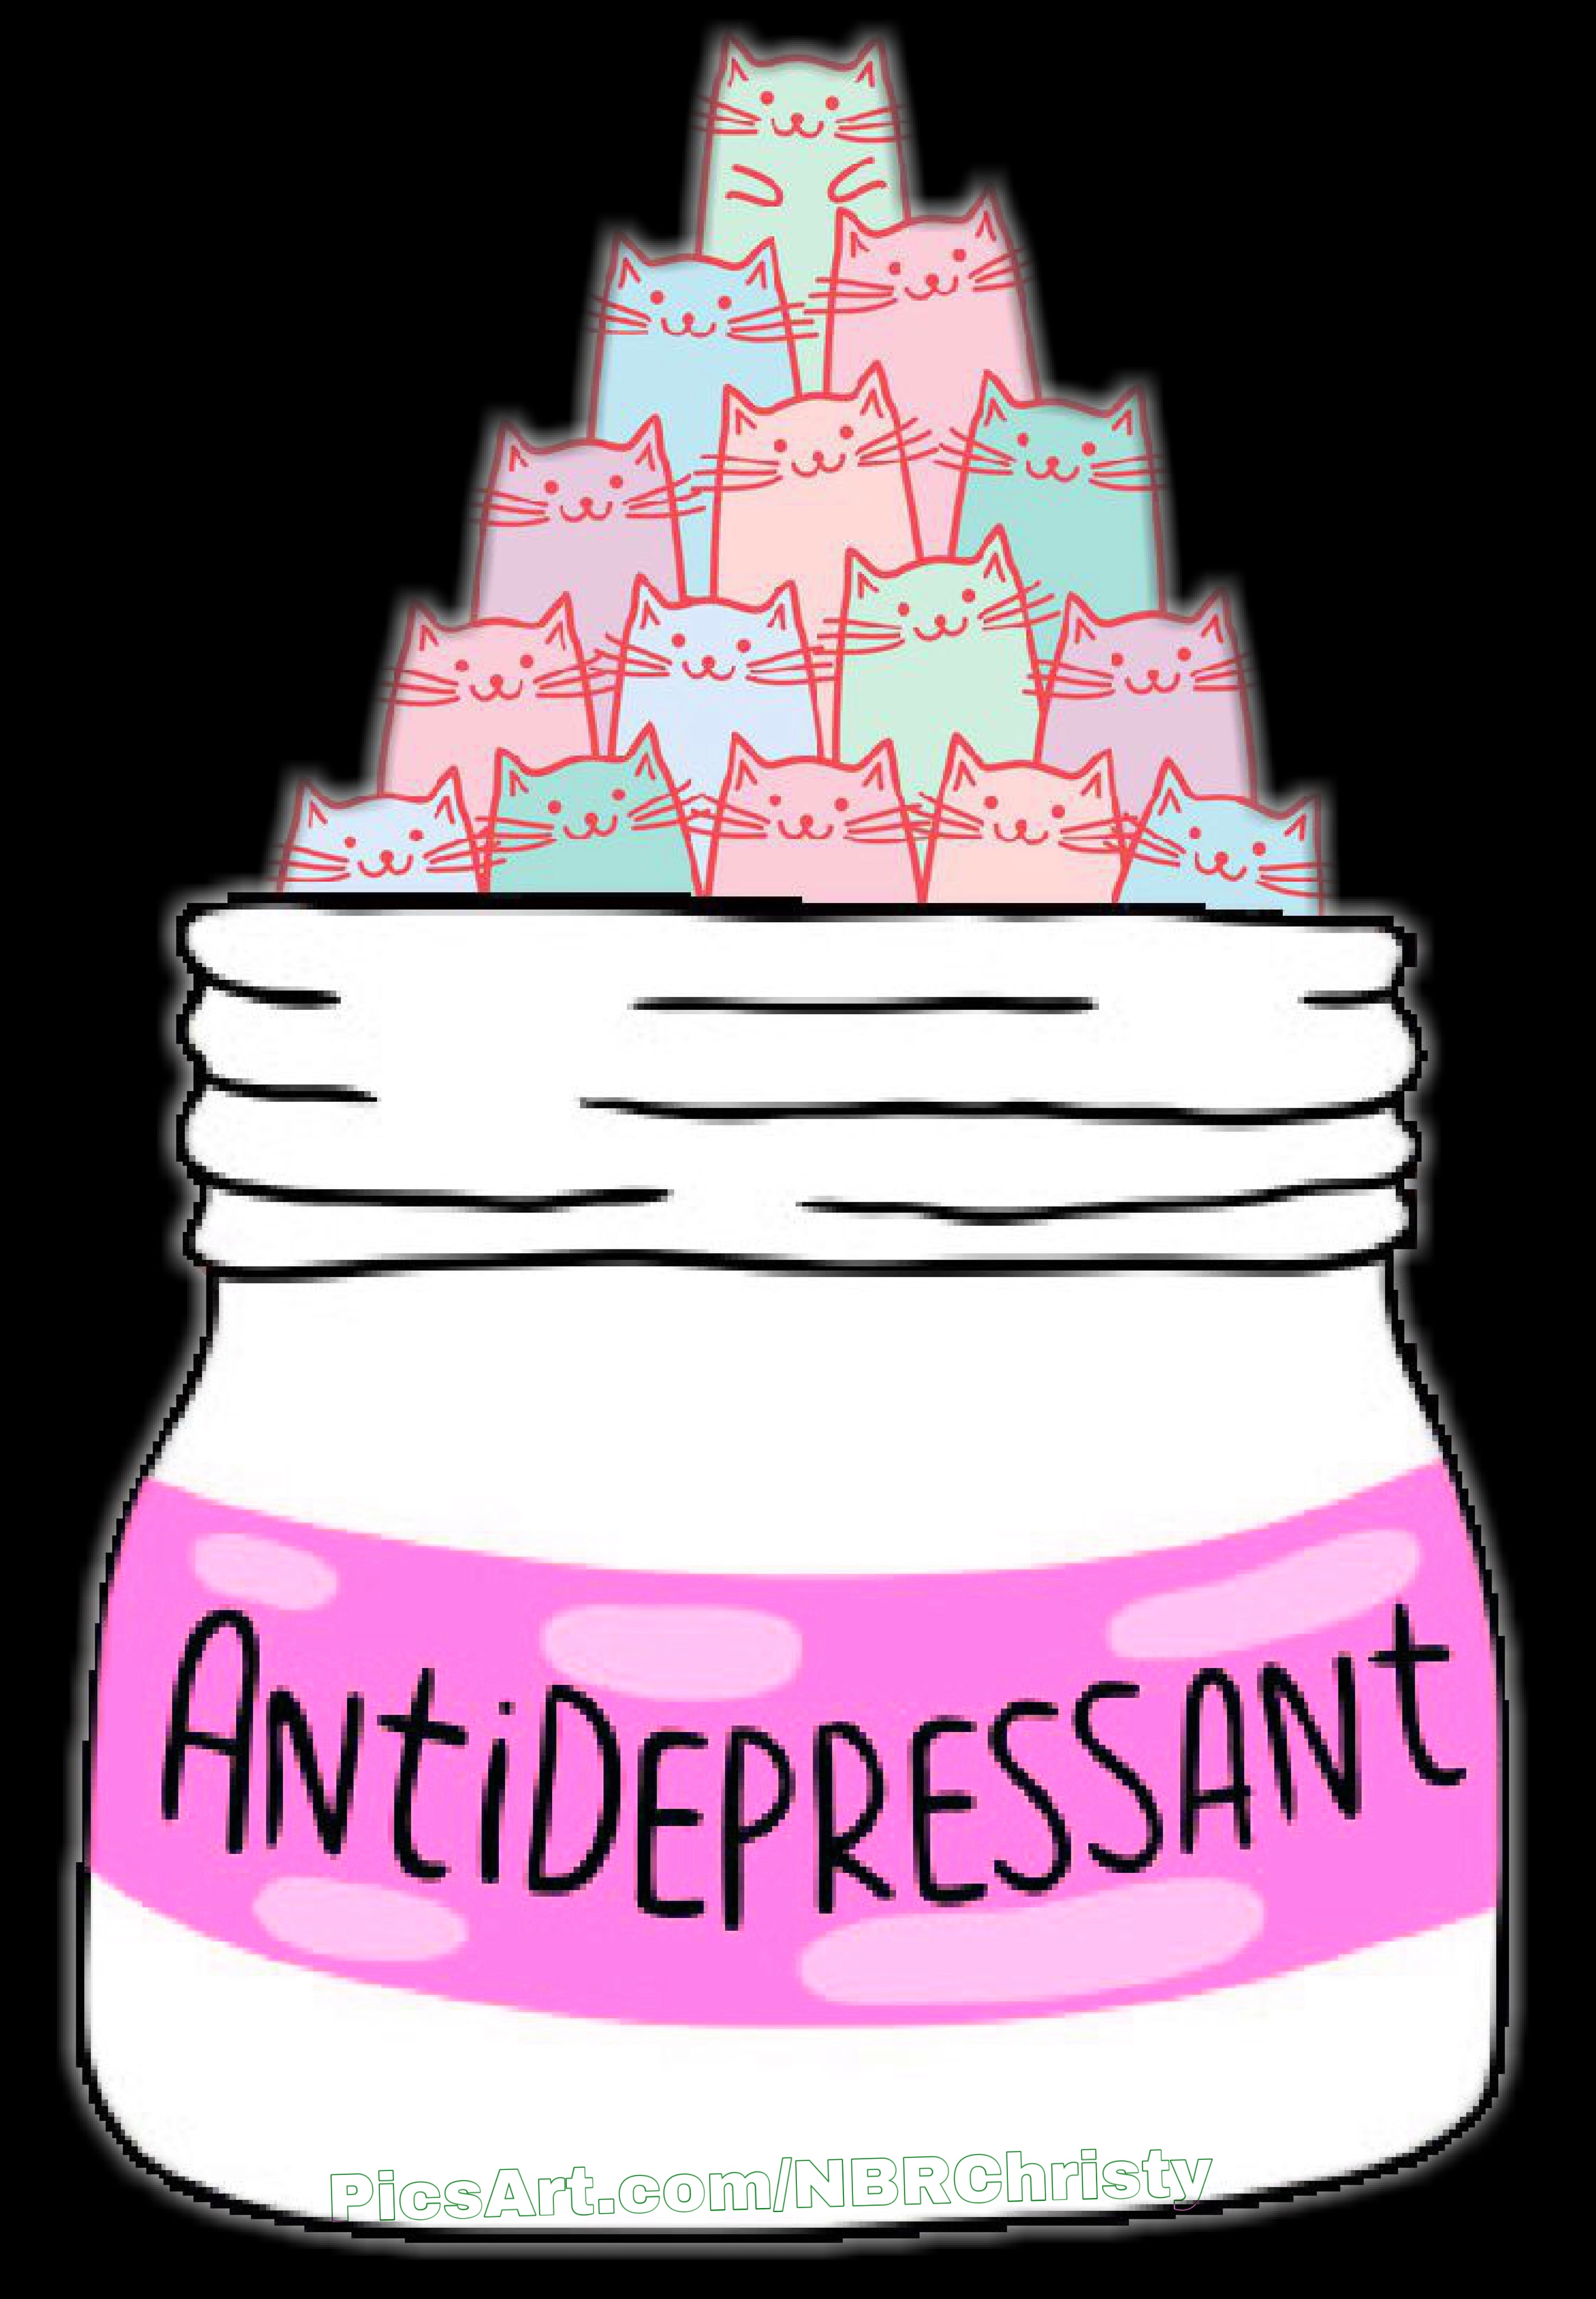 cat antidepressants